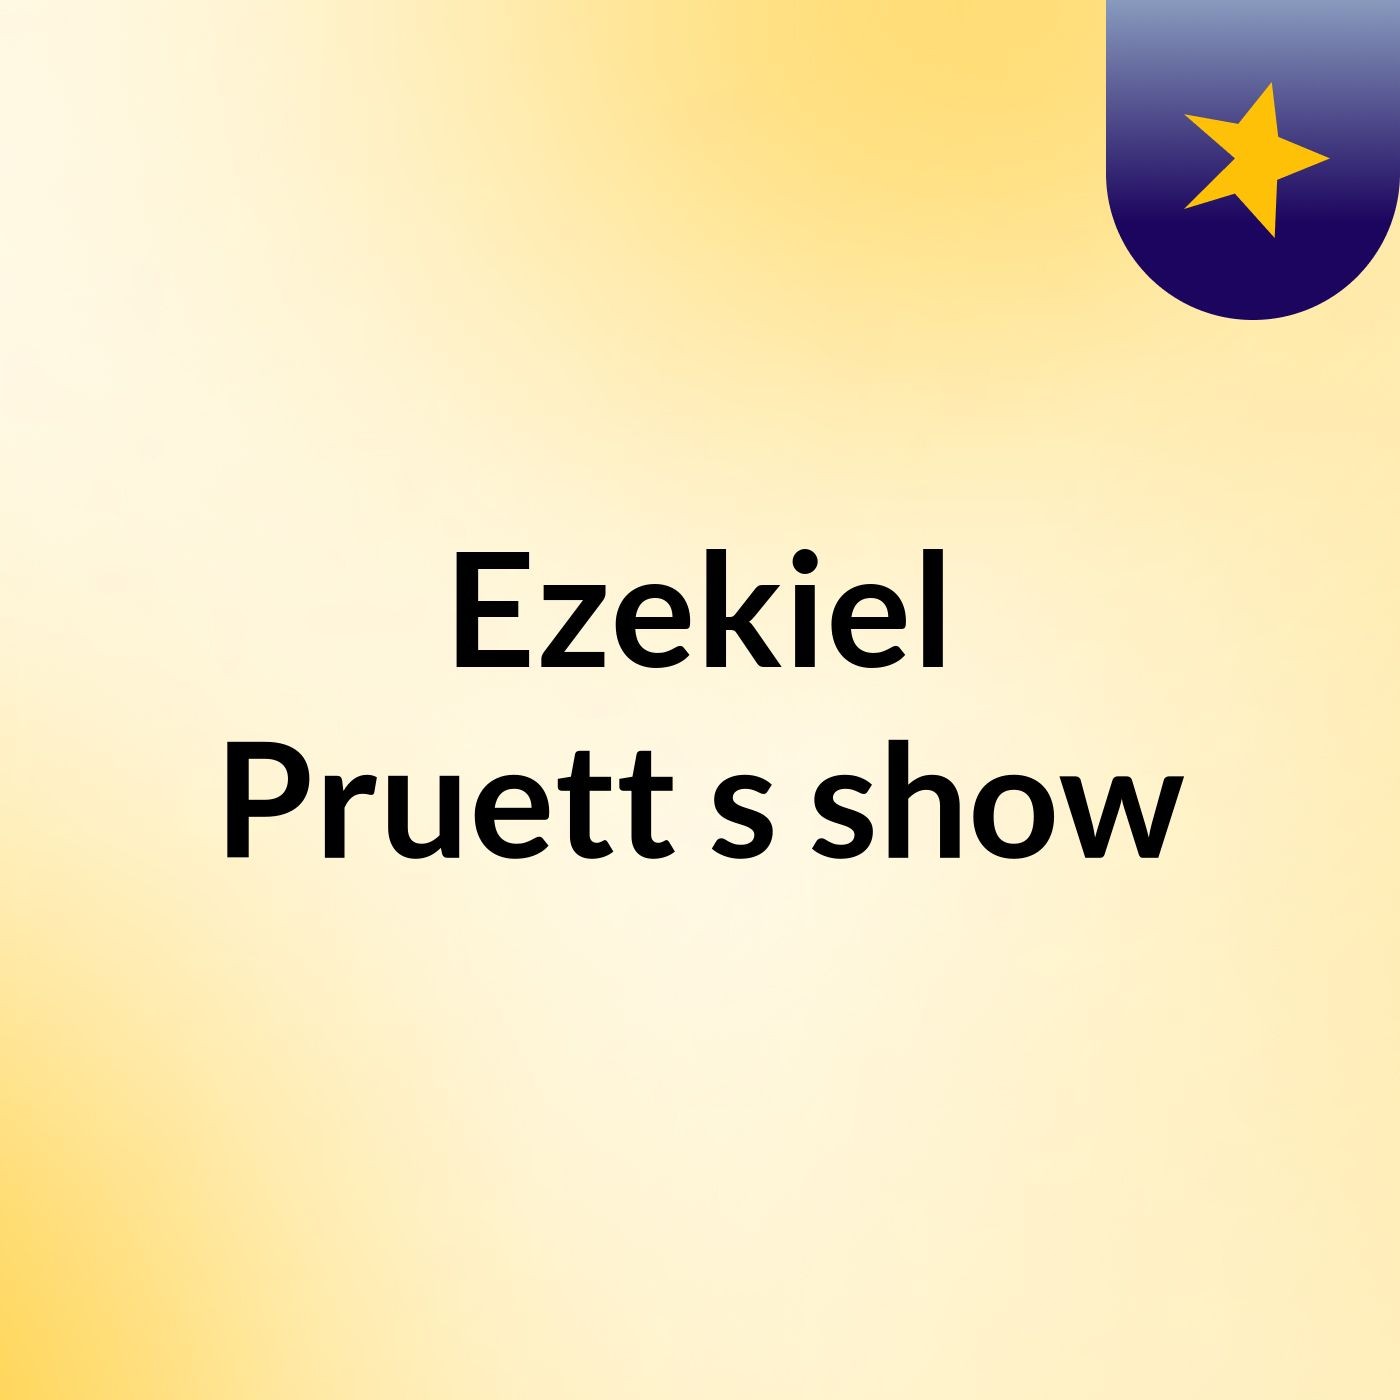 Ezekiel Pruett's show